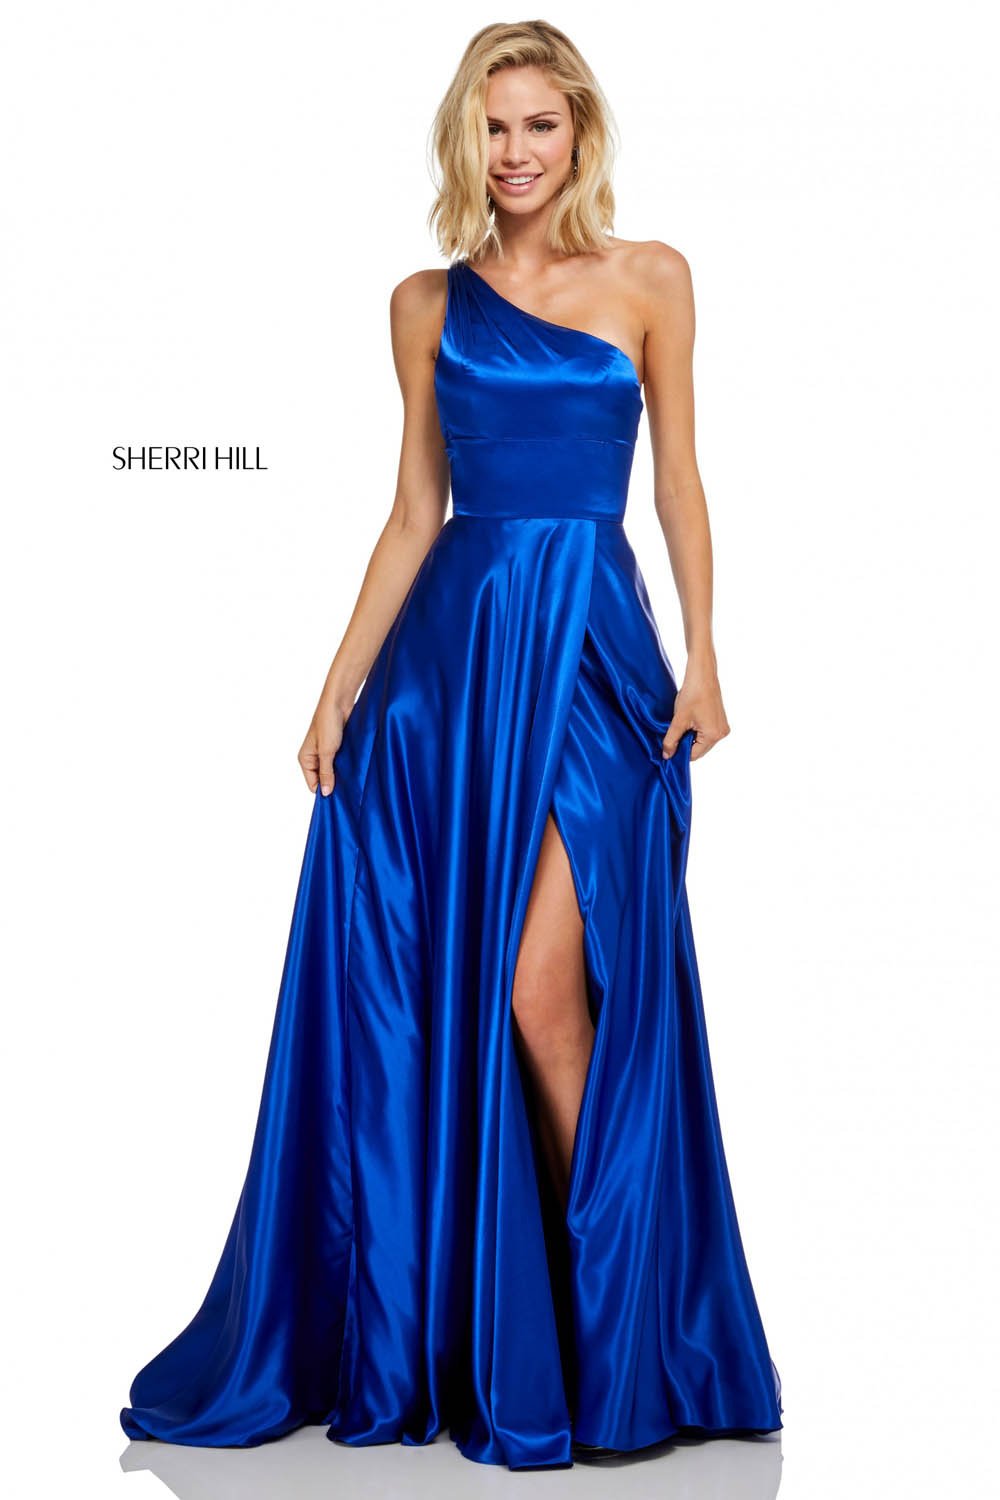 Sherri Hill Royal Blue Prom Dress Top ...